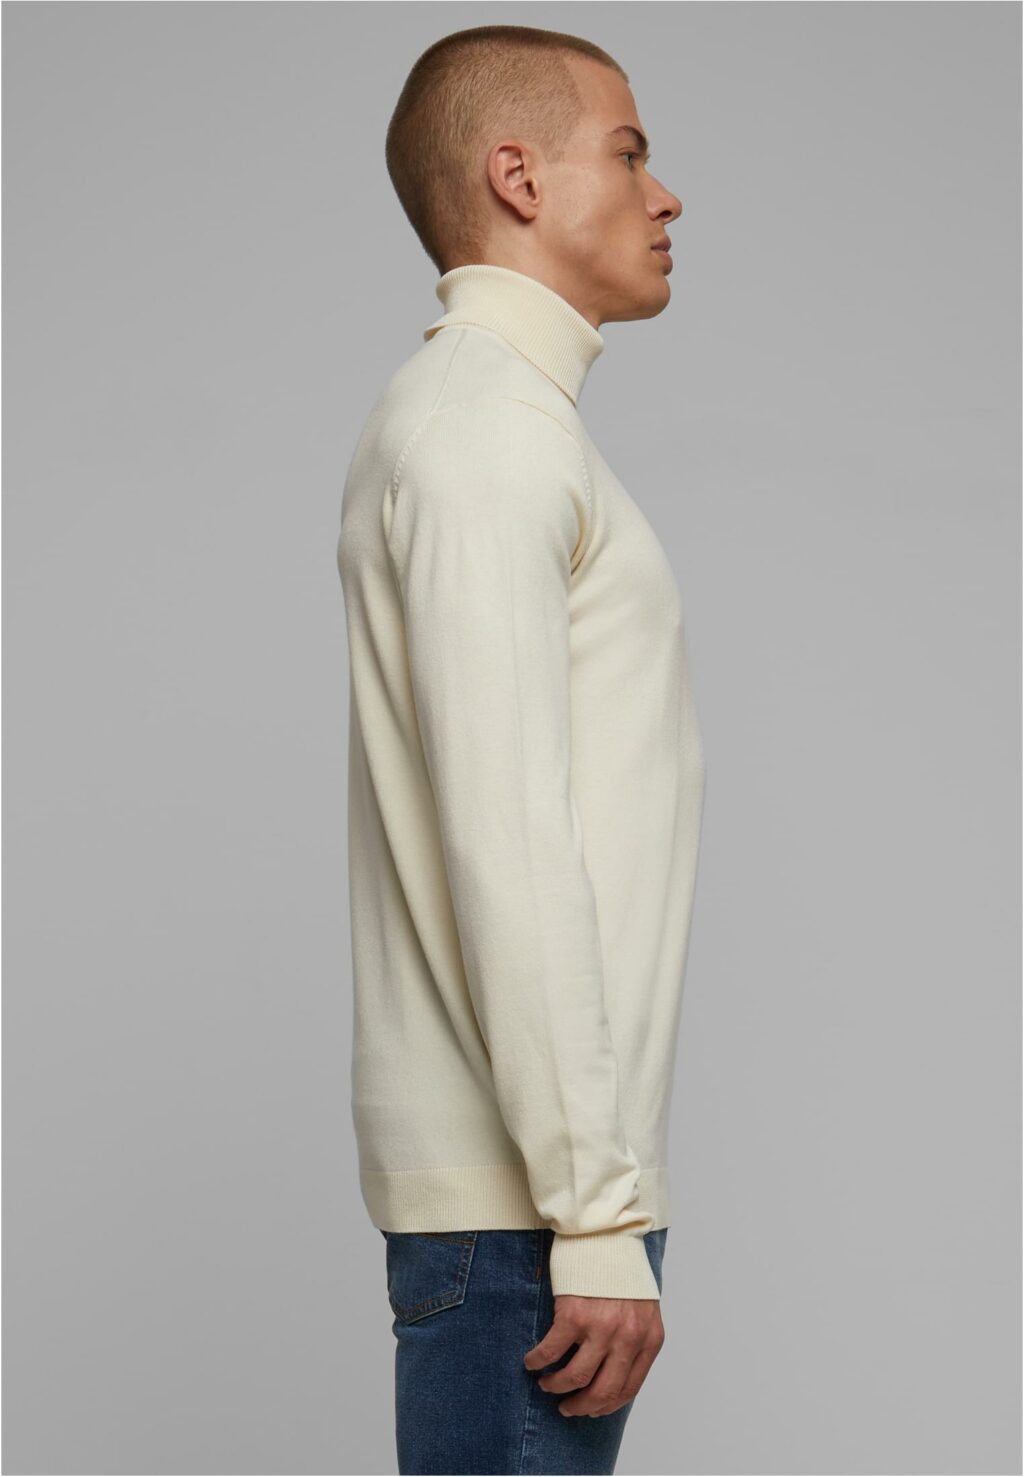 Urban Classics Knitted Turtleneck Sweater whitesand TB6360